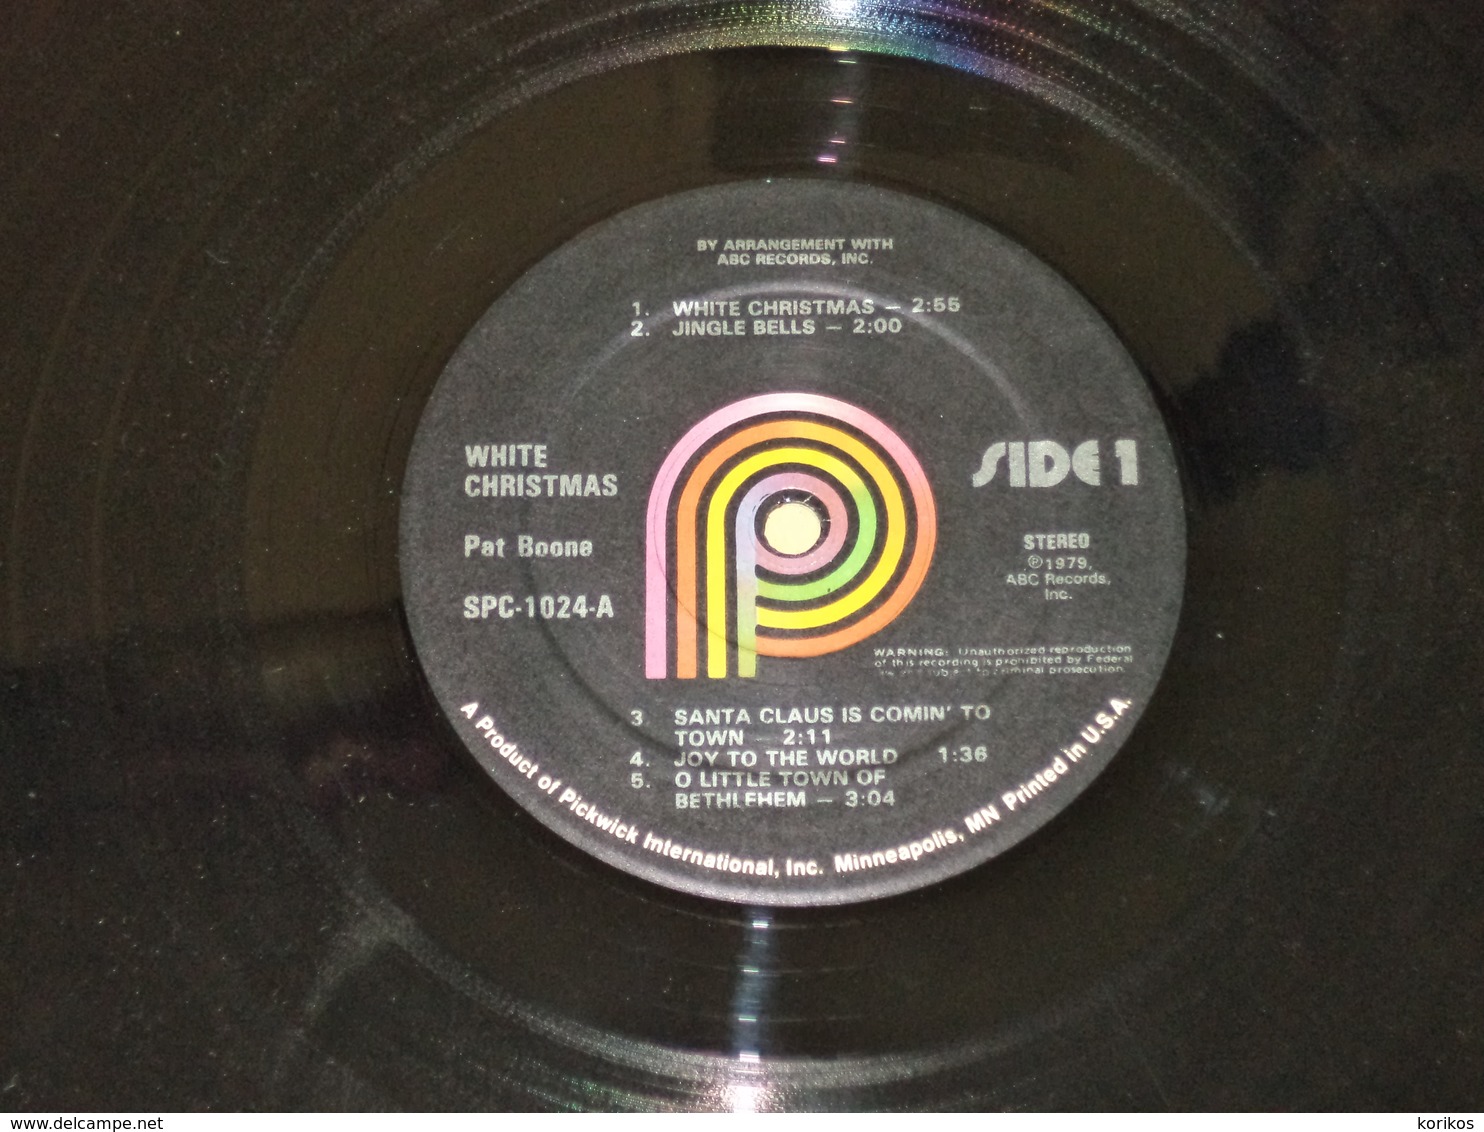 PAT BOONE - WHITE CHRISTMAS – PICKWICK RECORDS – VINYL 1979 – SPC-1024